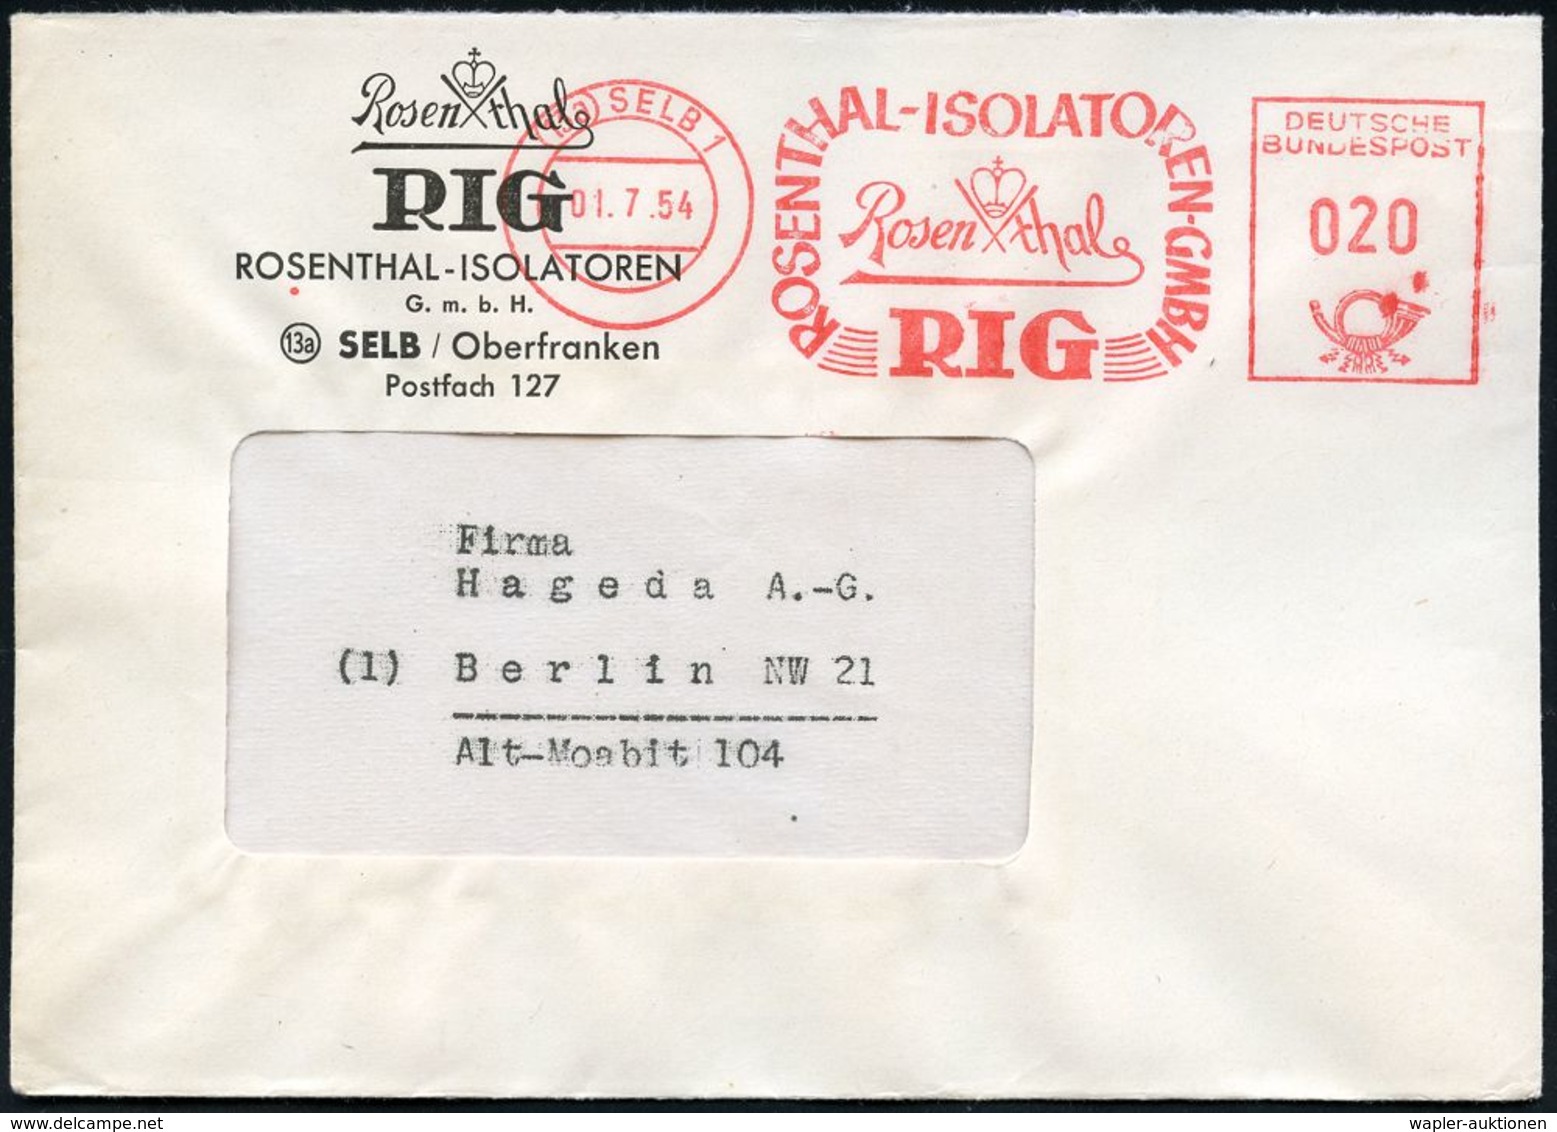 KERAMIK / PORZELLAN / MANUFAKTUREN : (13a) SELB 1/ ROSENTHAL-ISOLATOREN-GMBH/ RIG.. 1954 (1.7.) AFS (Firmen-Logo) Motivg - Porcellana